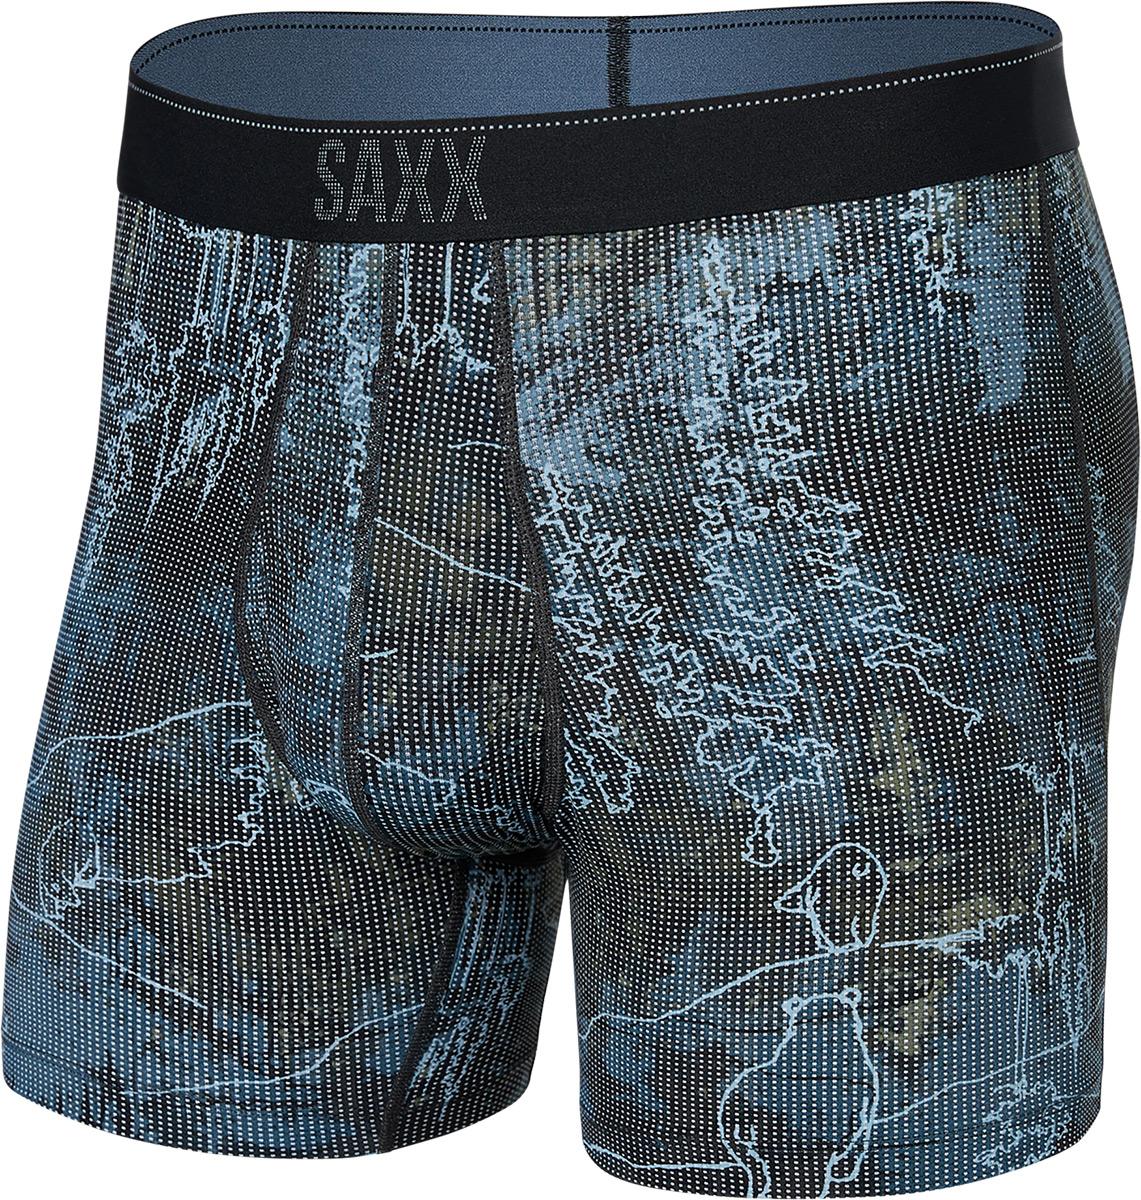 Saxx Quest Boxer Brief Fly - Smokey Mountains- Multi